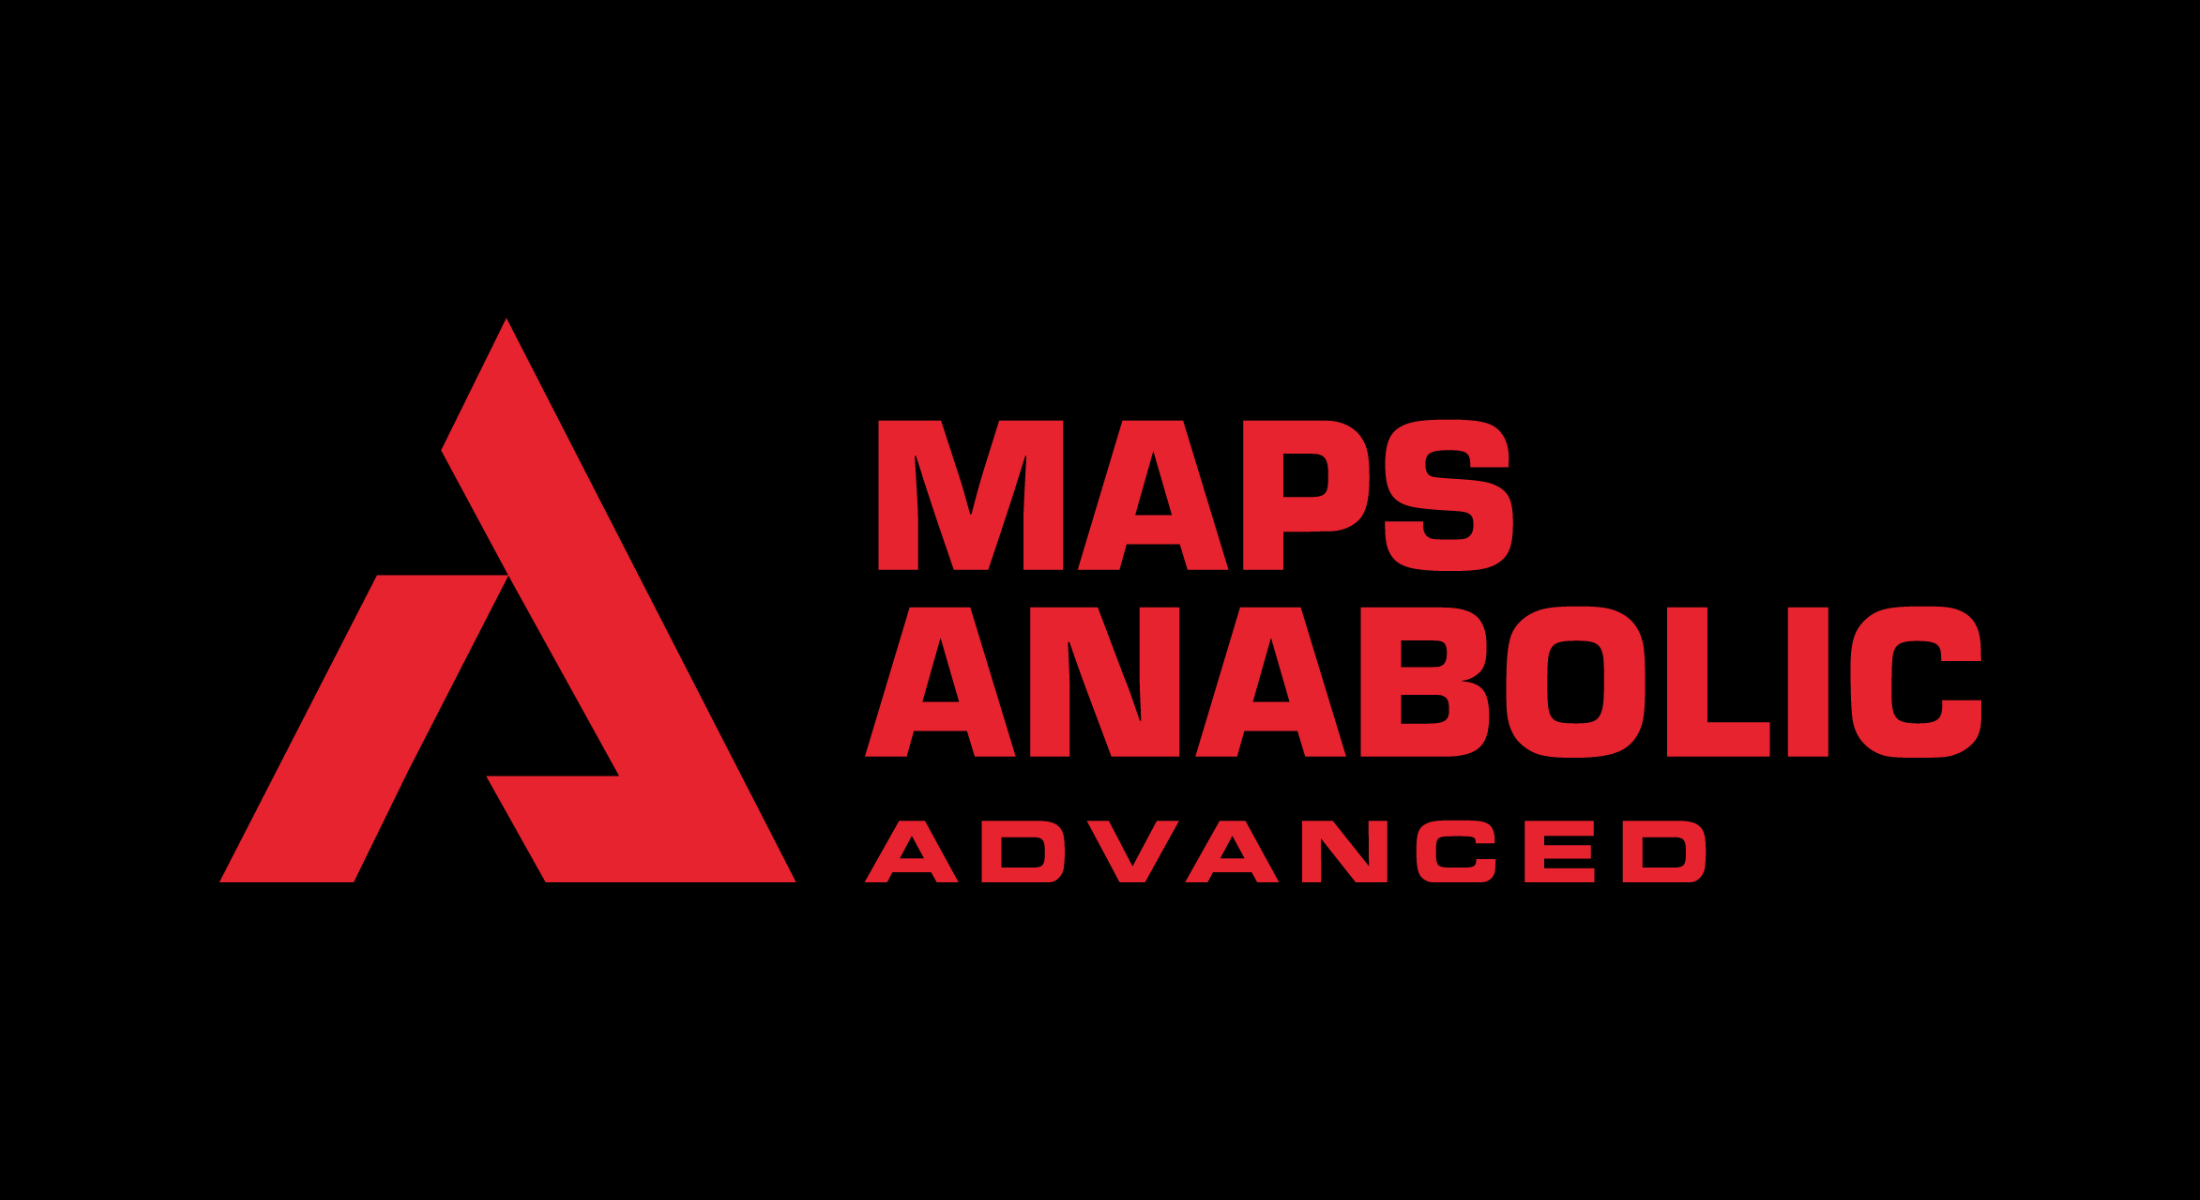 MAPS Anabolic Advanced